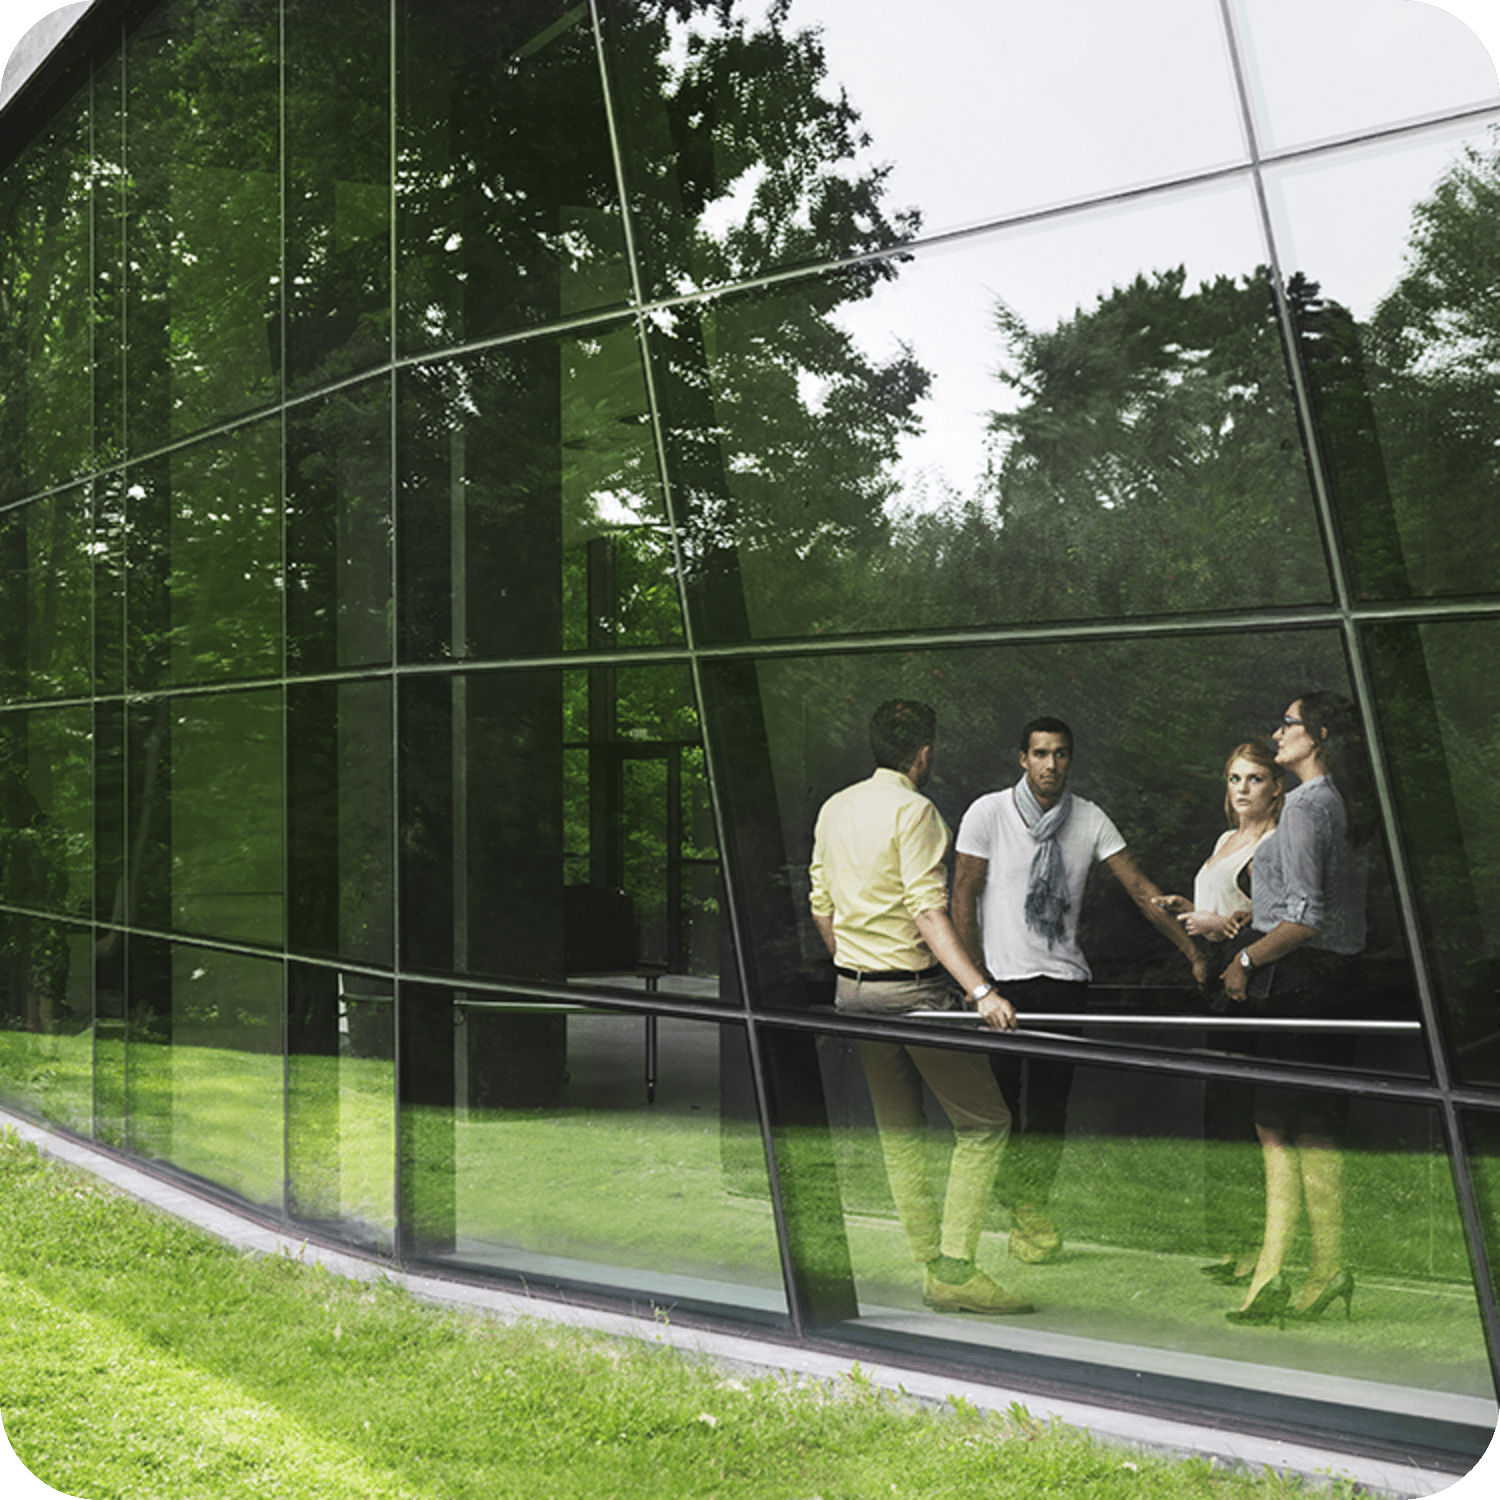 colleagues talking inside glass wall building near green grass landscape